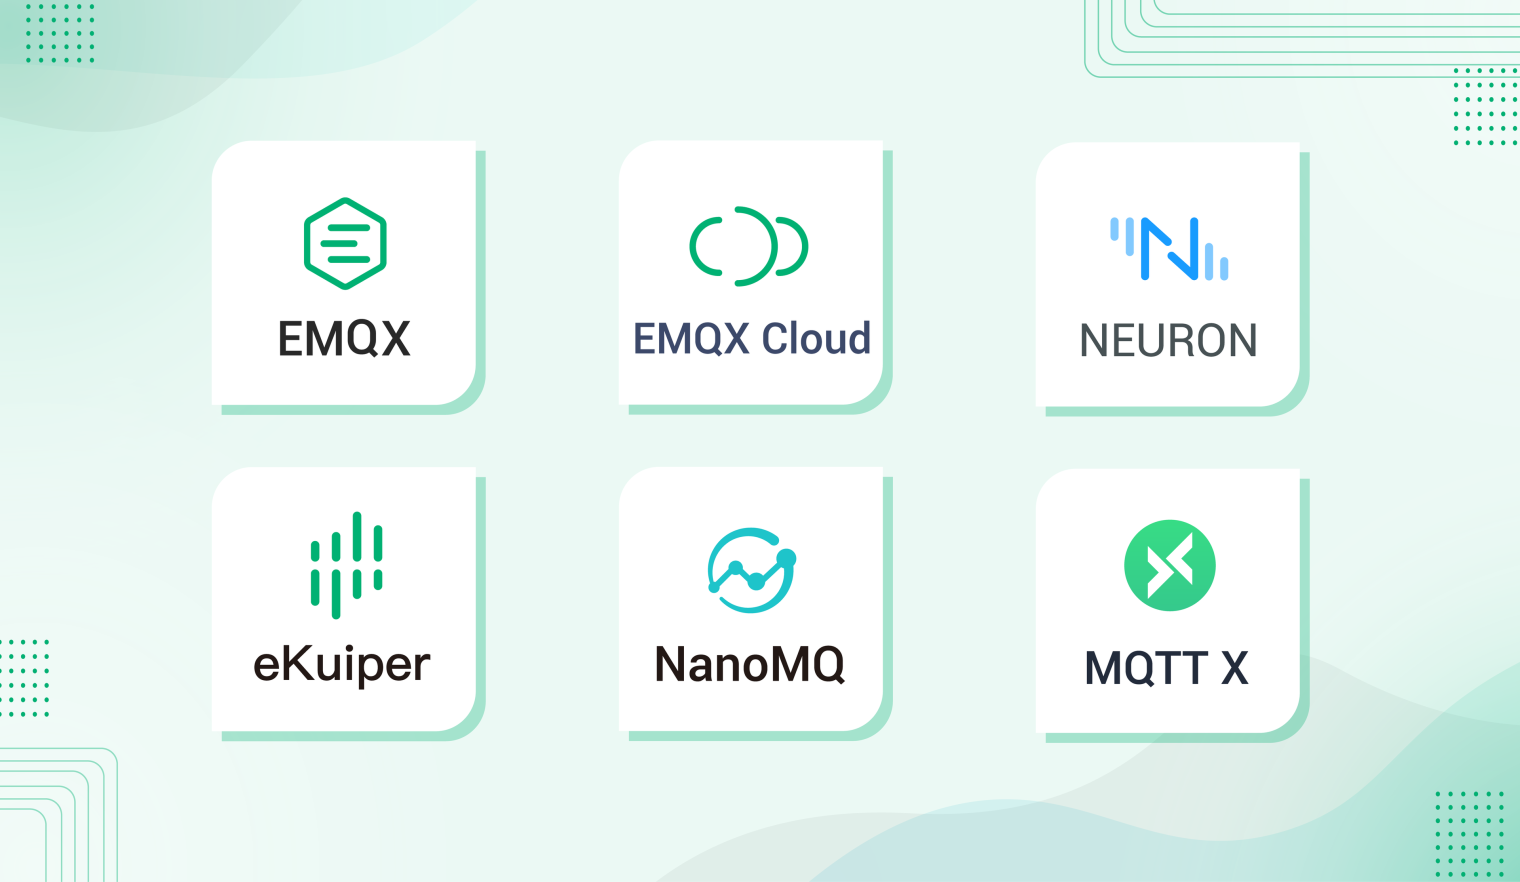 MQTT products developed by EMQ